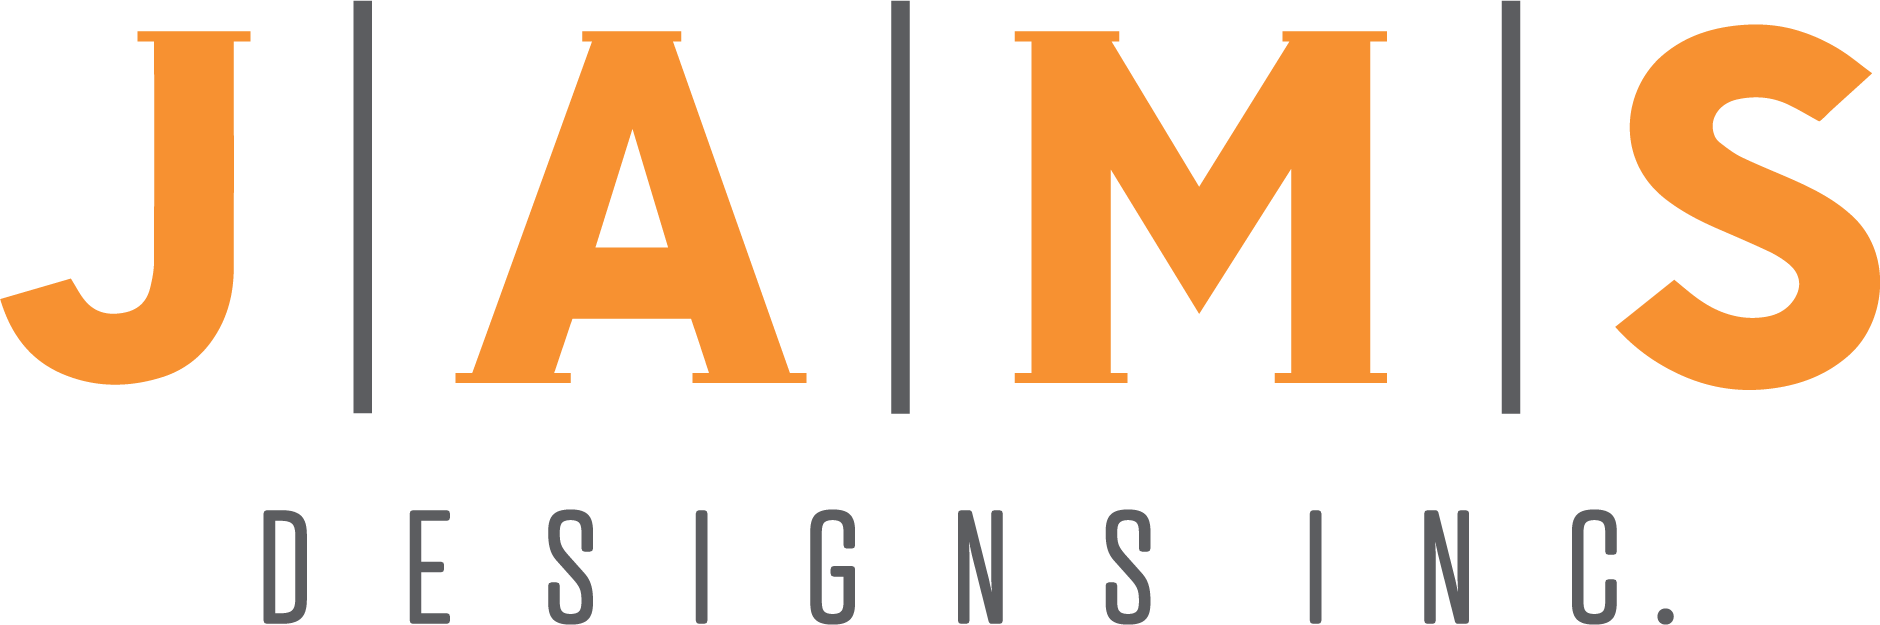 Jams designs inc